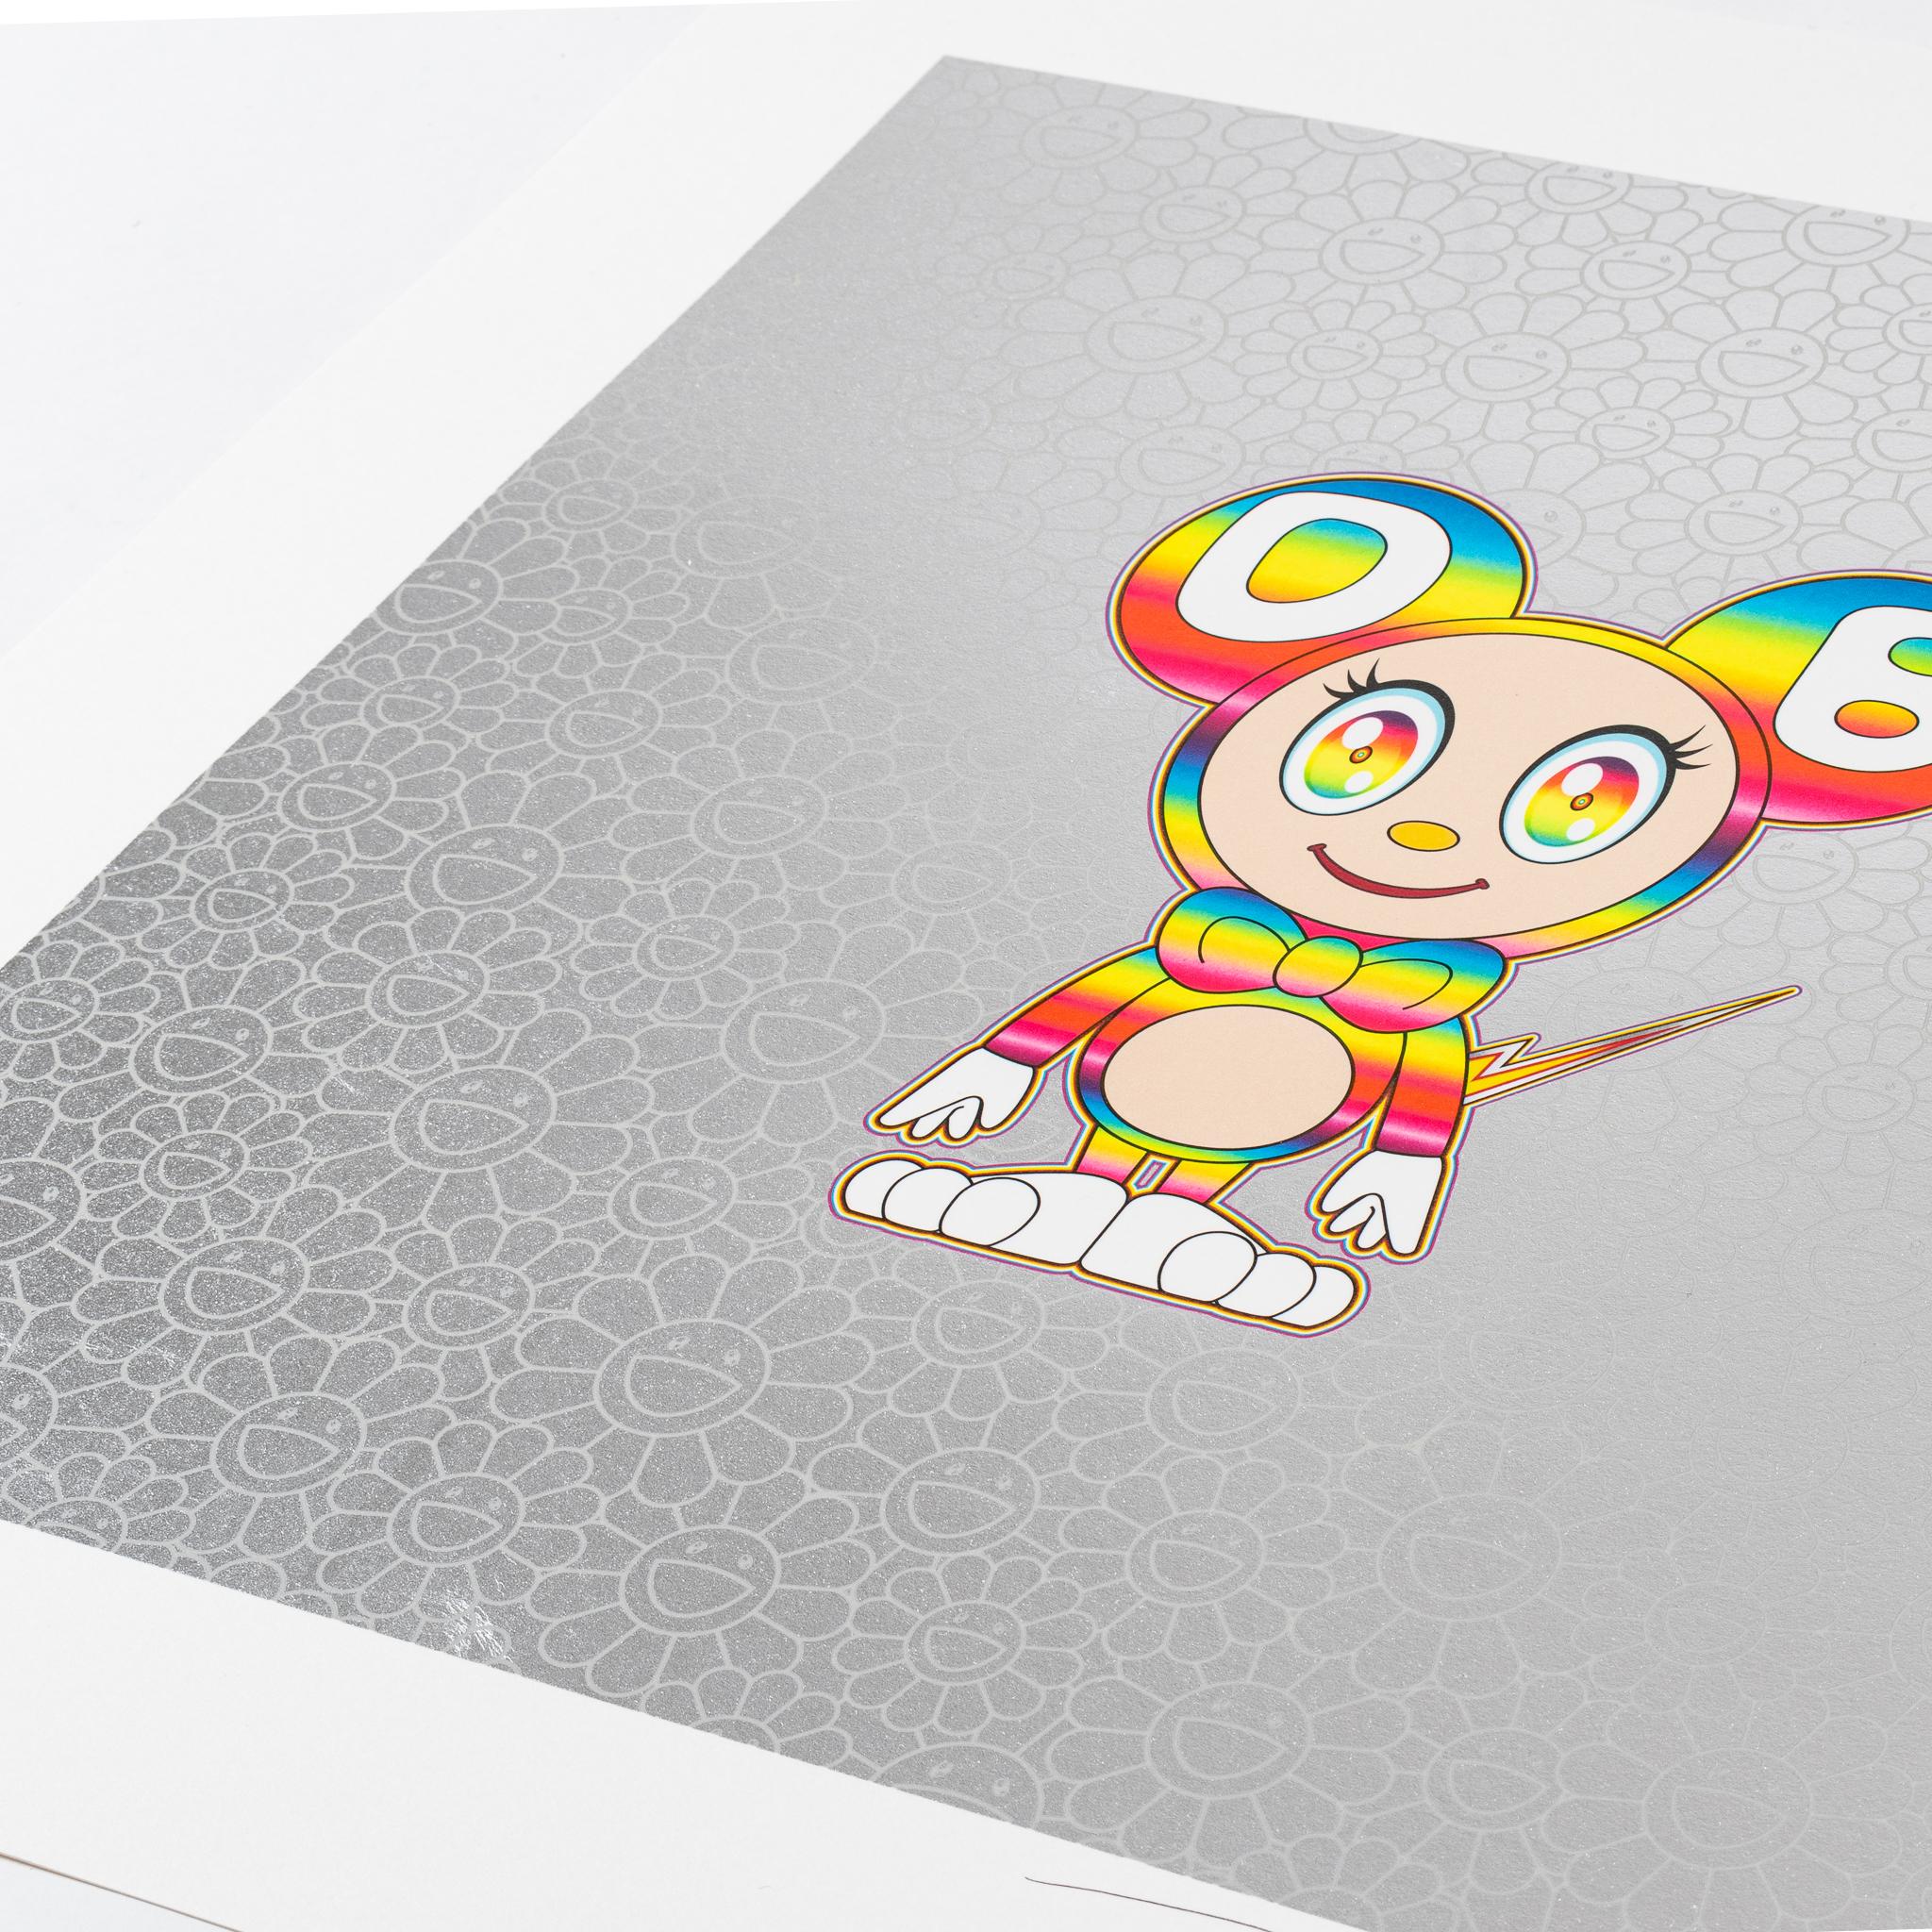 DOB Rainbow - Contemporary Print by Takashi Murakami